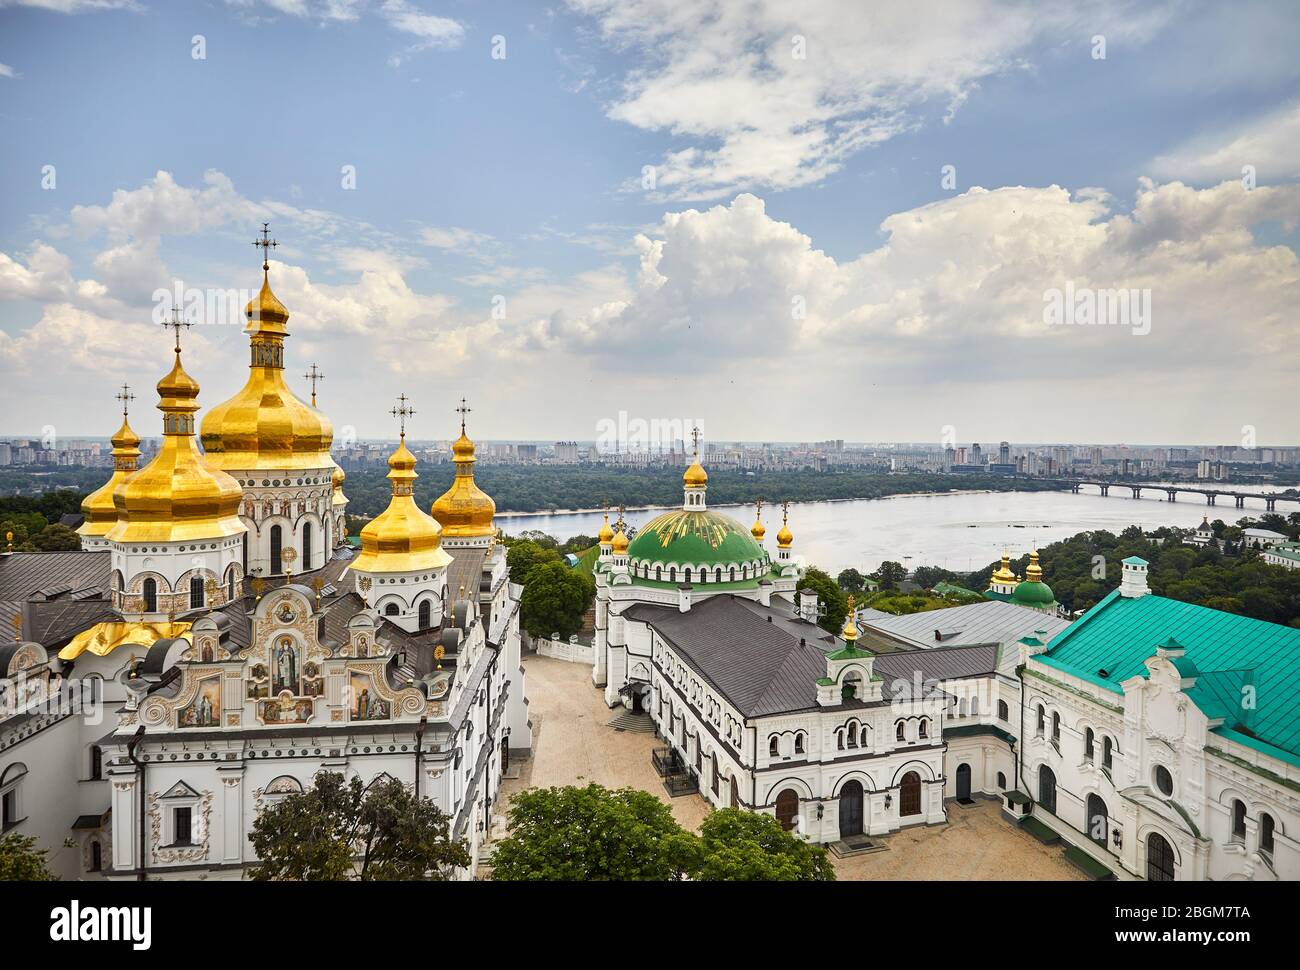 Kirche mit goldenen Kuppeln in Kiew Pechersk Lavra Christian komplex. Alte historische Architektur in Kiew, Ukraine Stockfoto